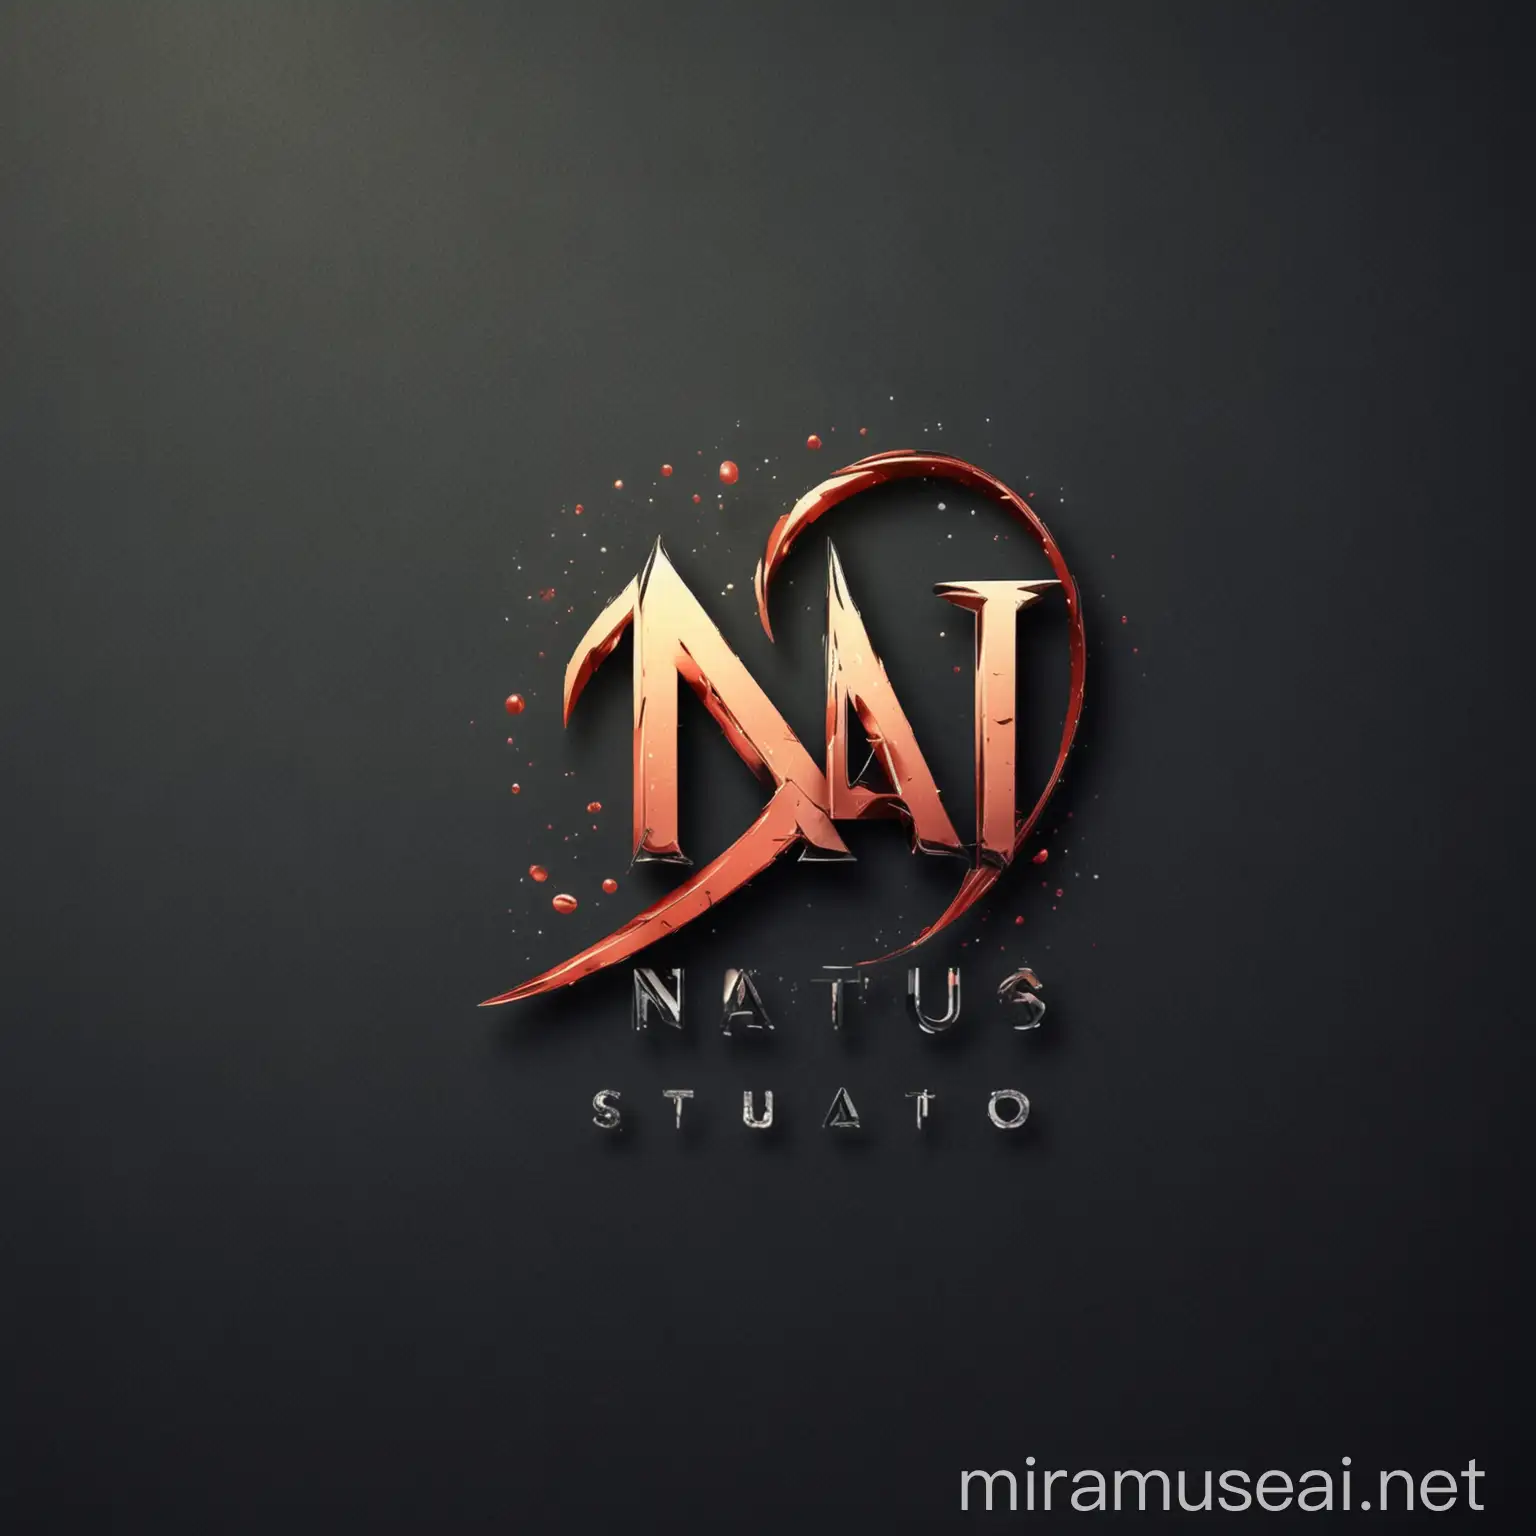 I went my graphics design company logo the company name is Nati studio